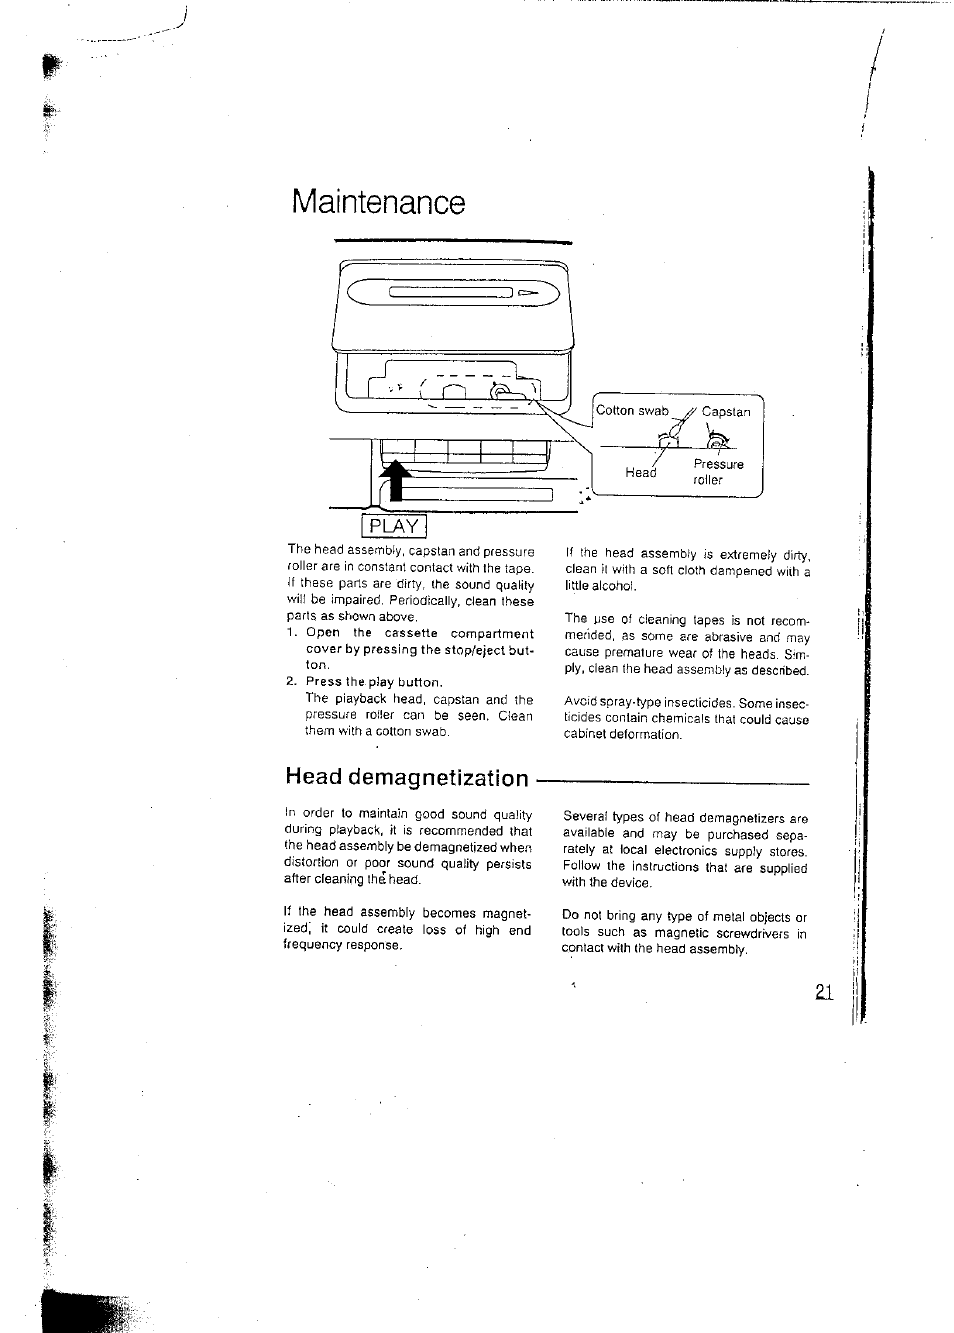 Maintenance, Head demagnetization | Panasonic RCX160 User Manual | Page 21 / 23